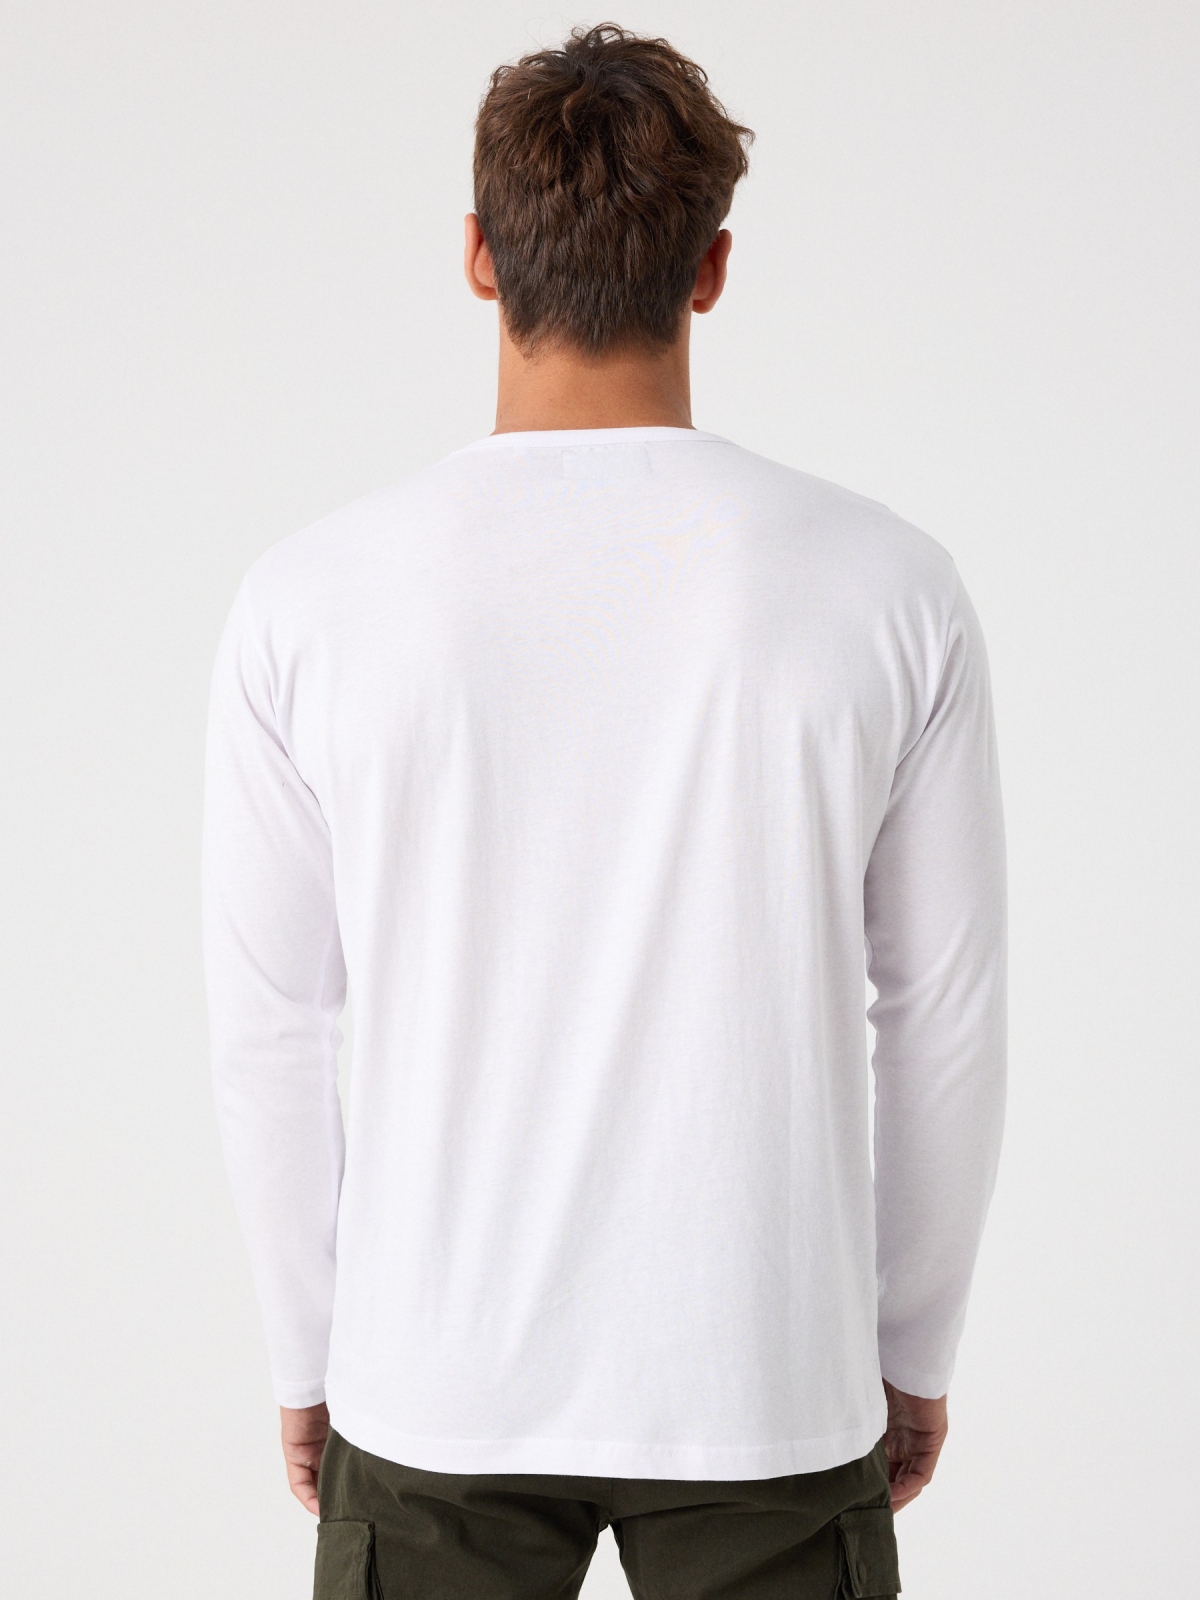 Camiseta básica manga larga blanco vista media trasera